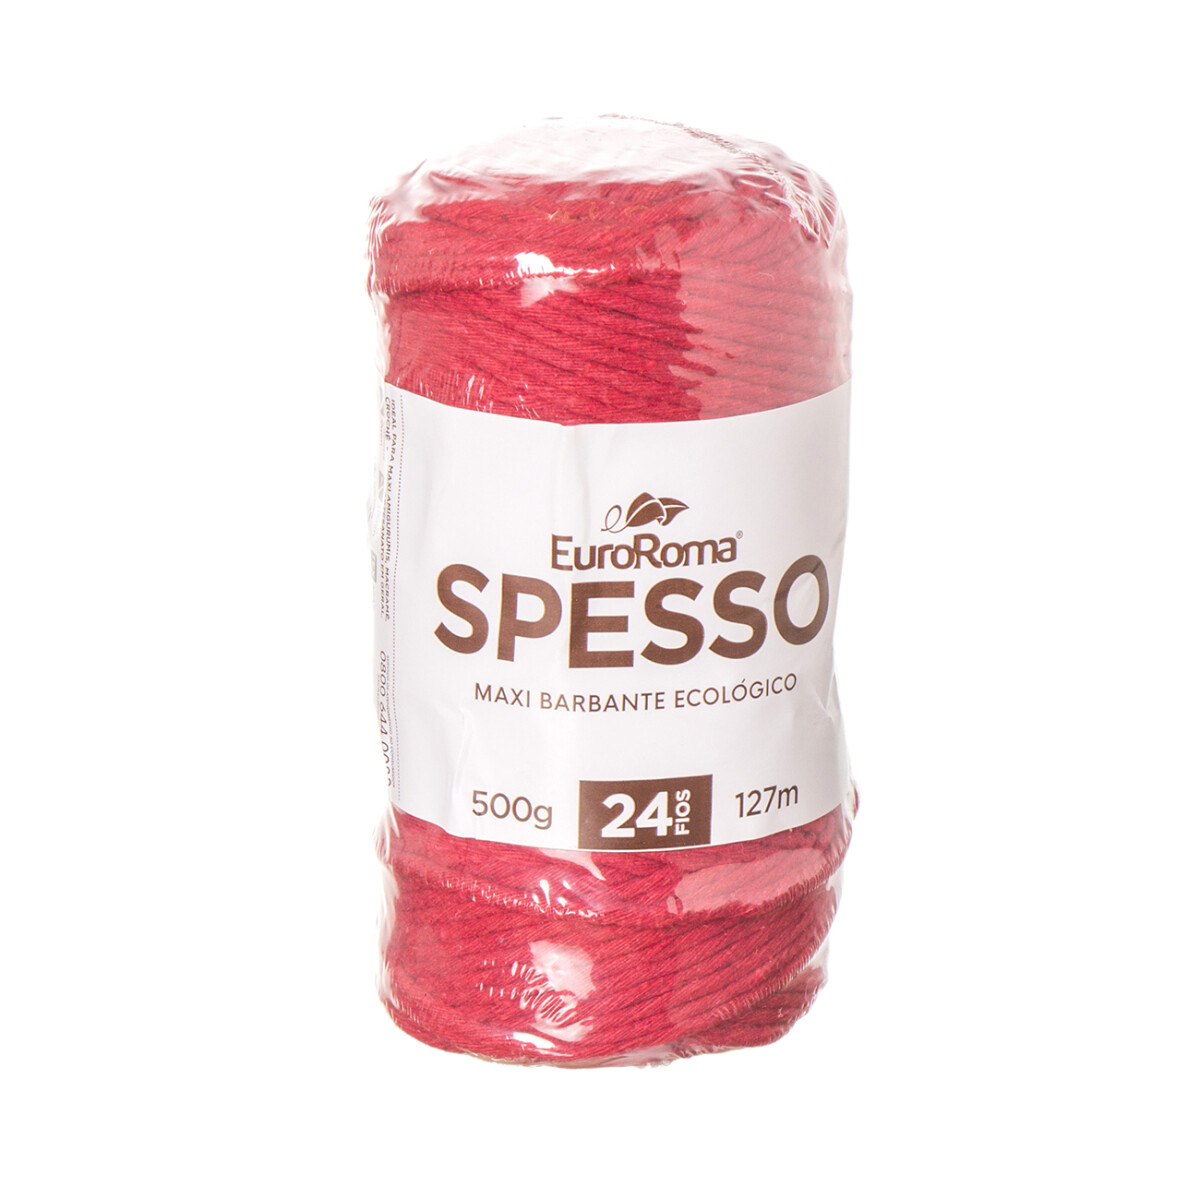 Spesso algodón Euroroma manualidades crochet y macrame - rojo 